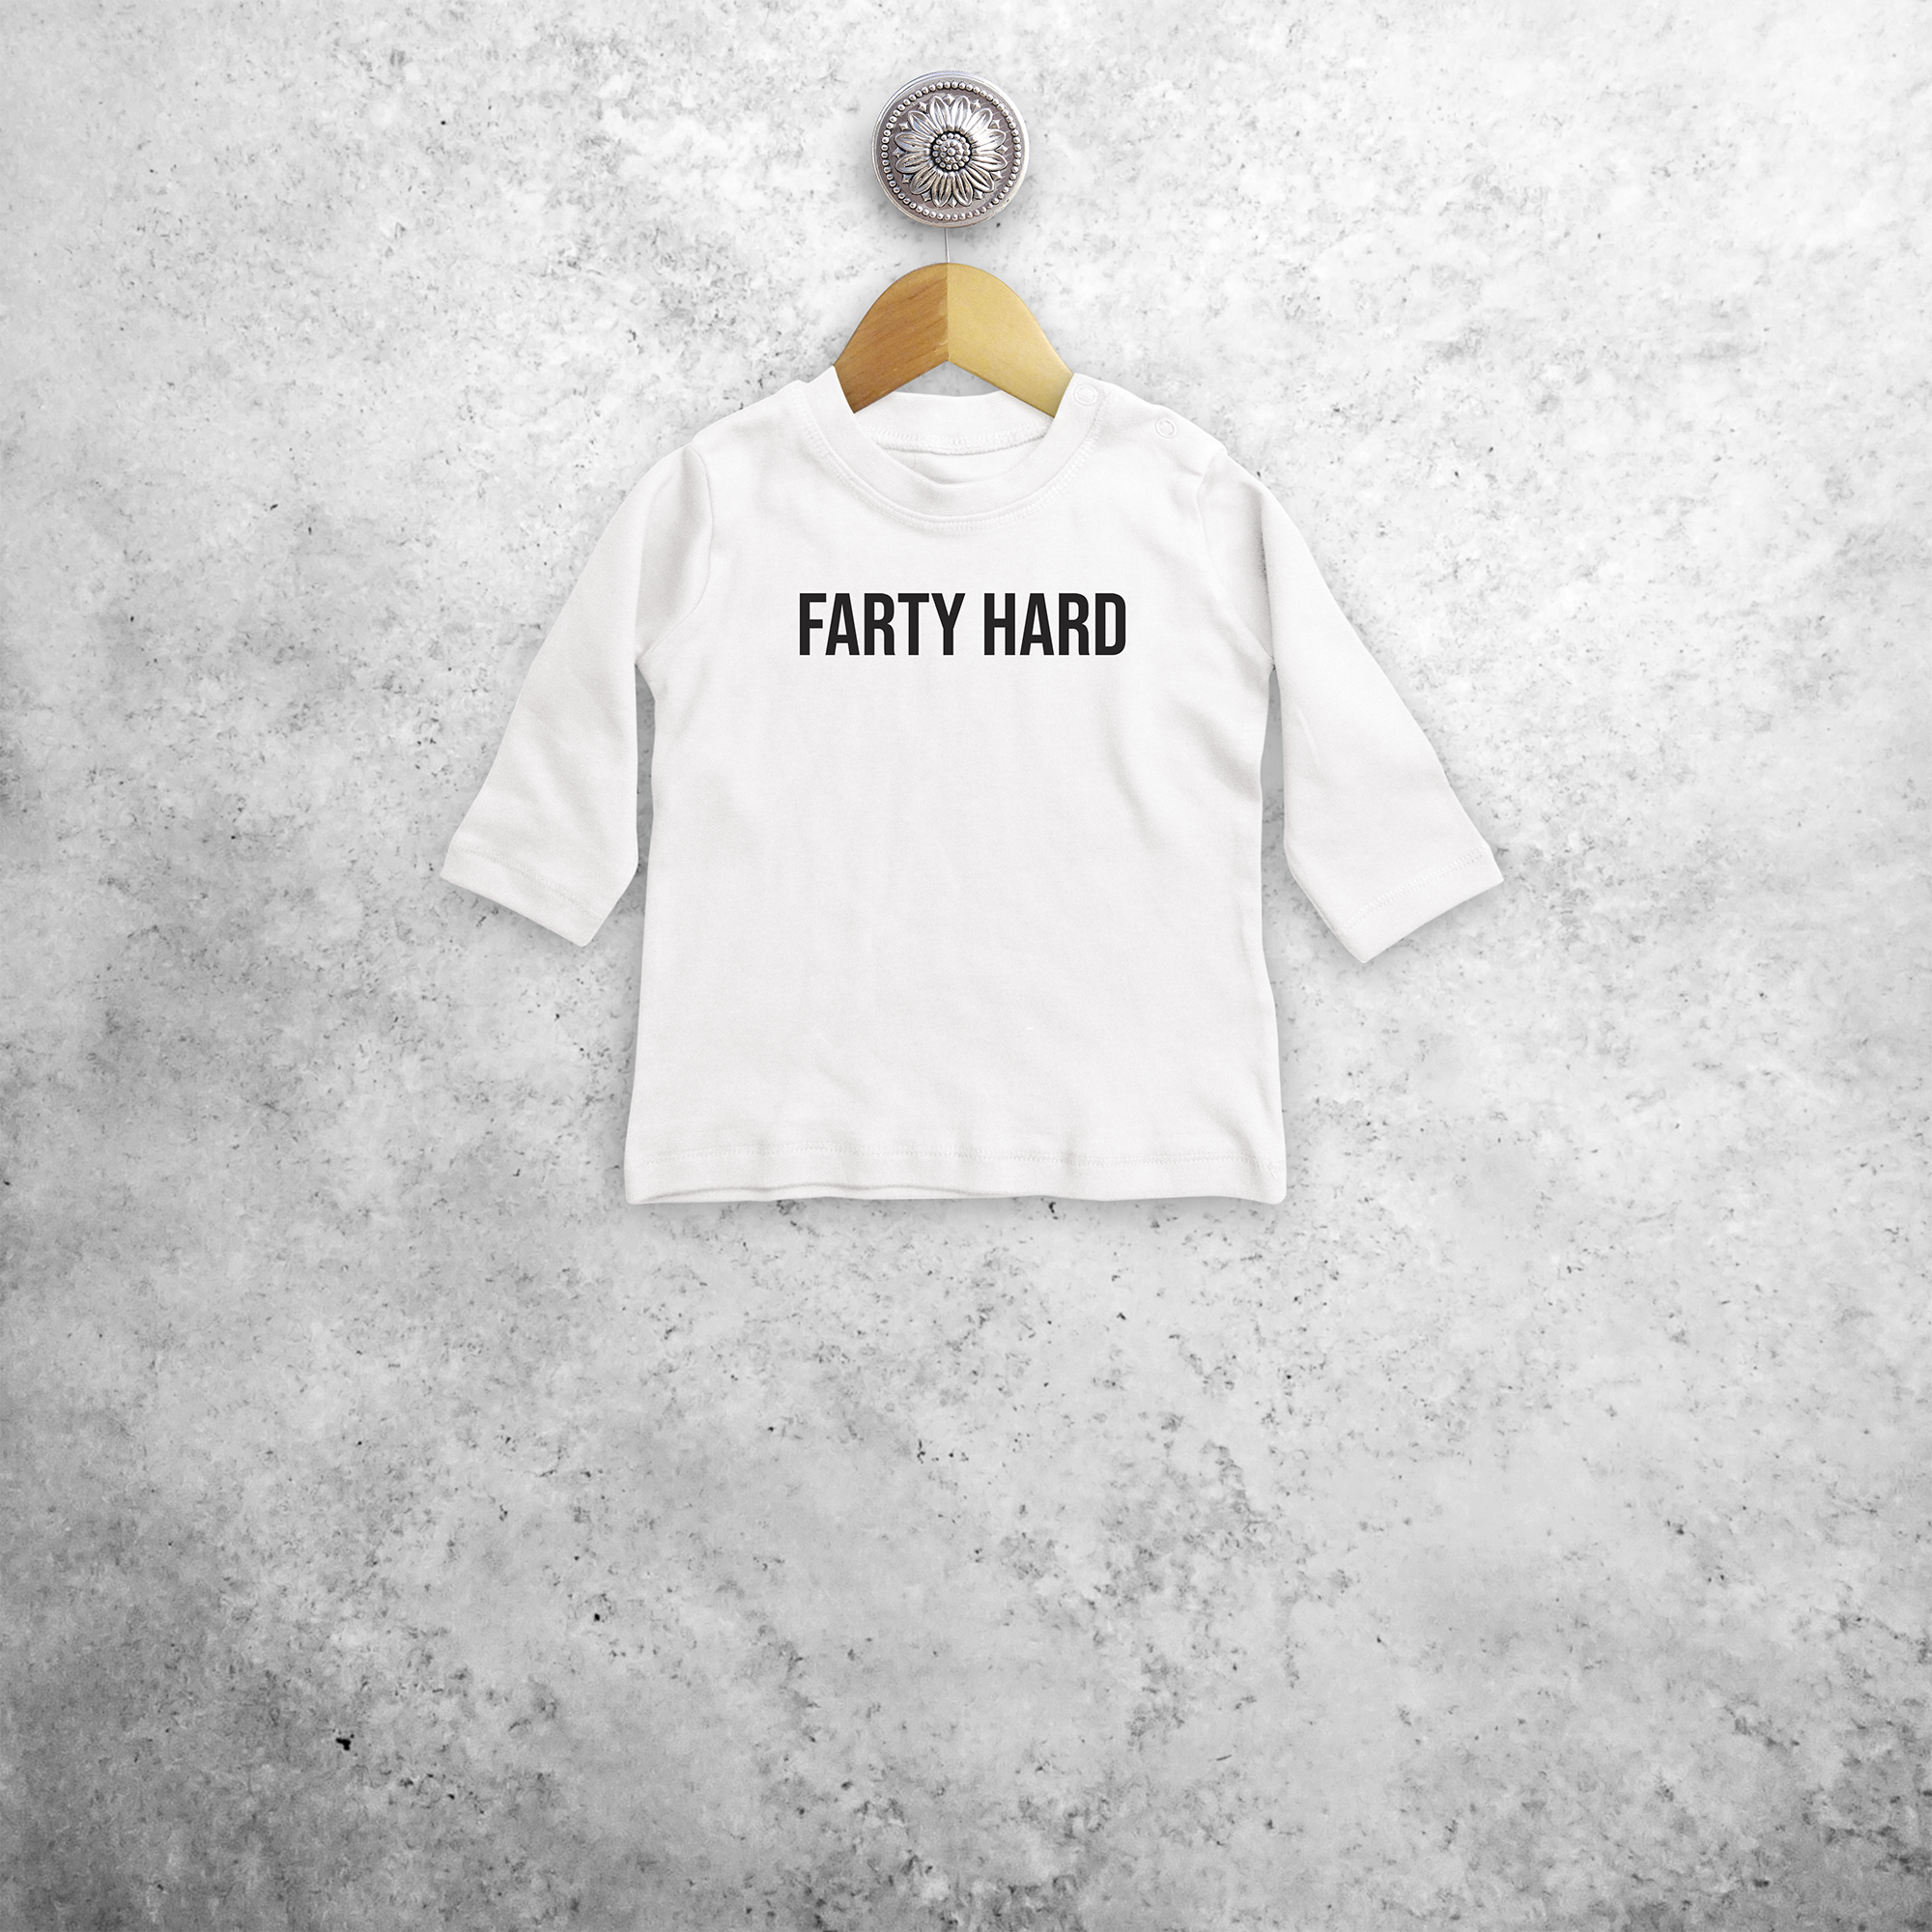 'Farty hard' baby longsleeve shirt